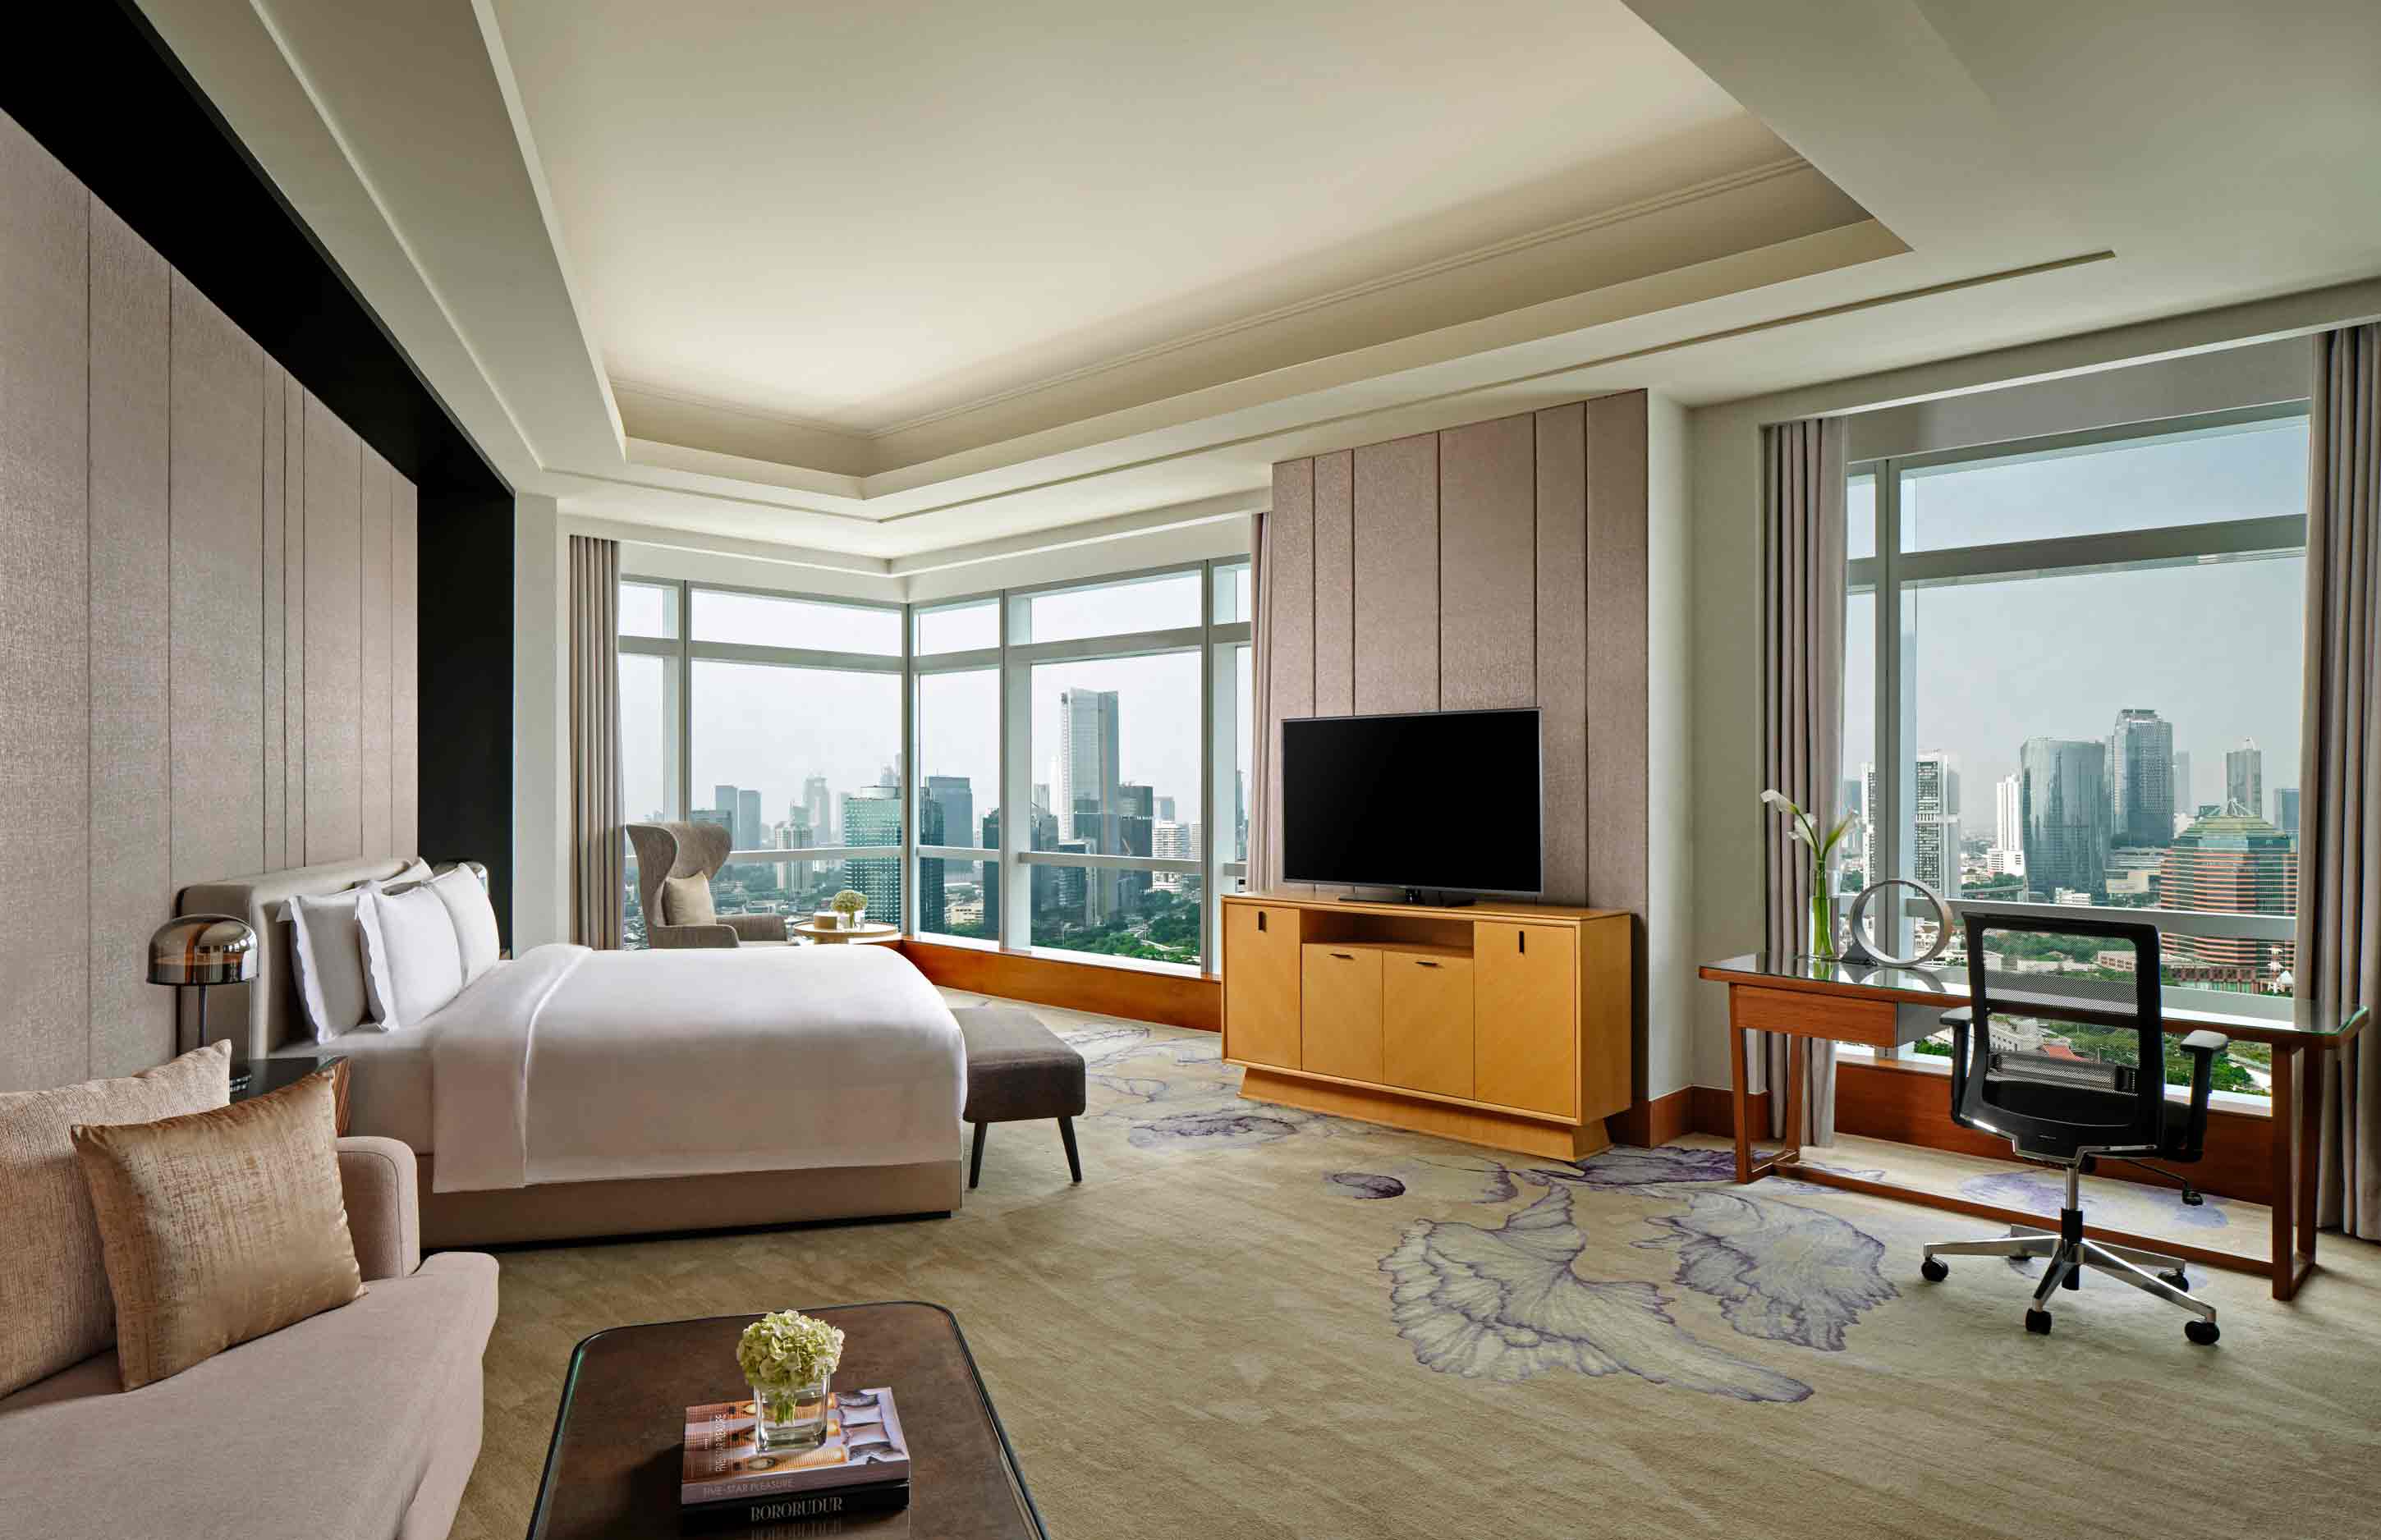 The Ritz-Carlton Pacific Place Jakarta